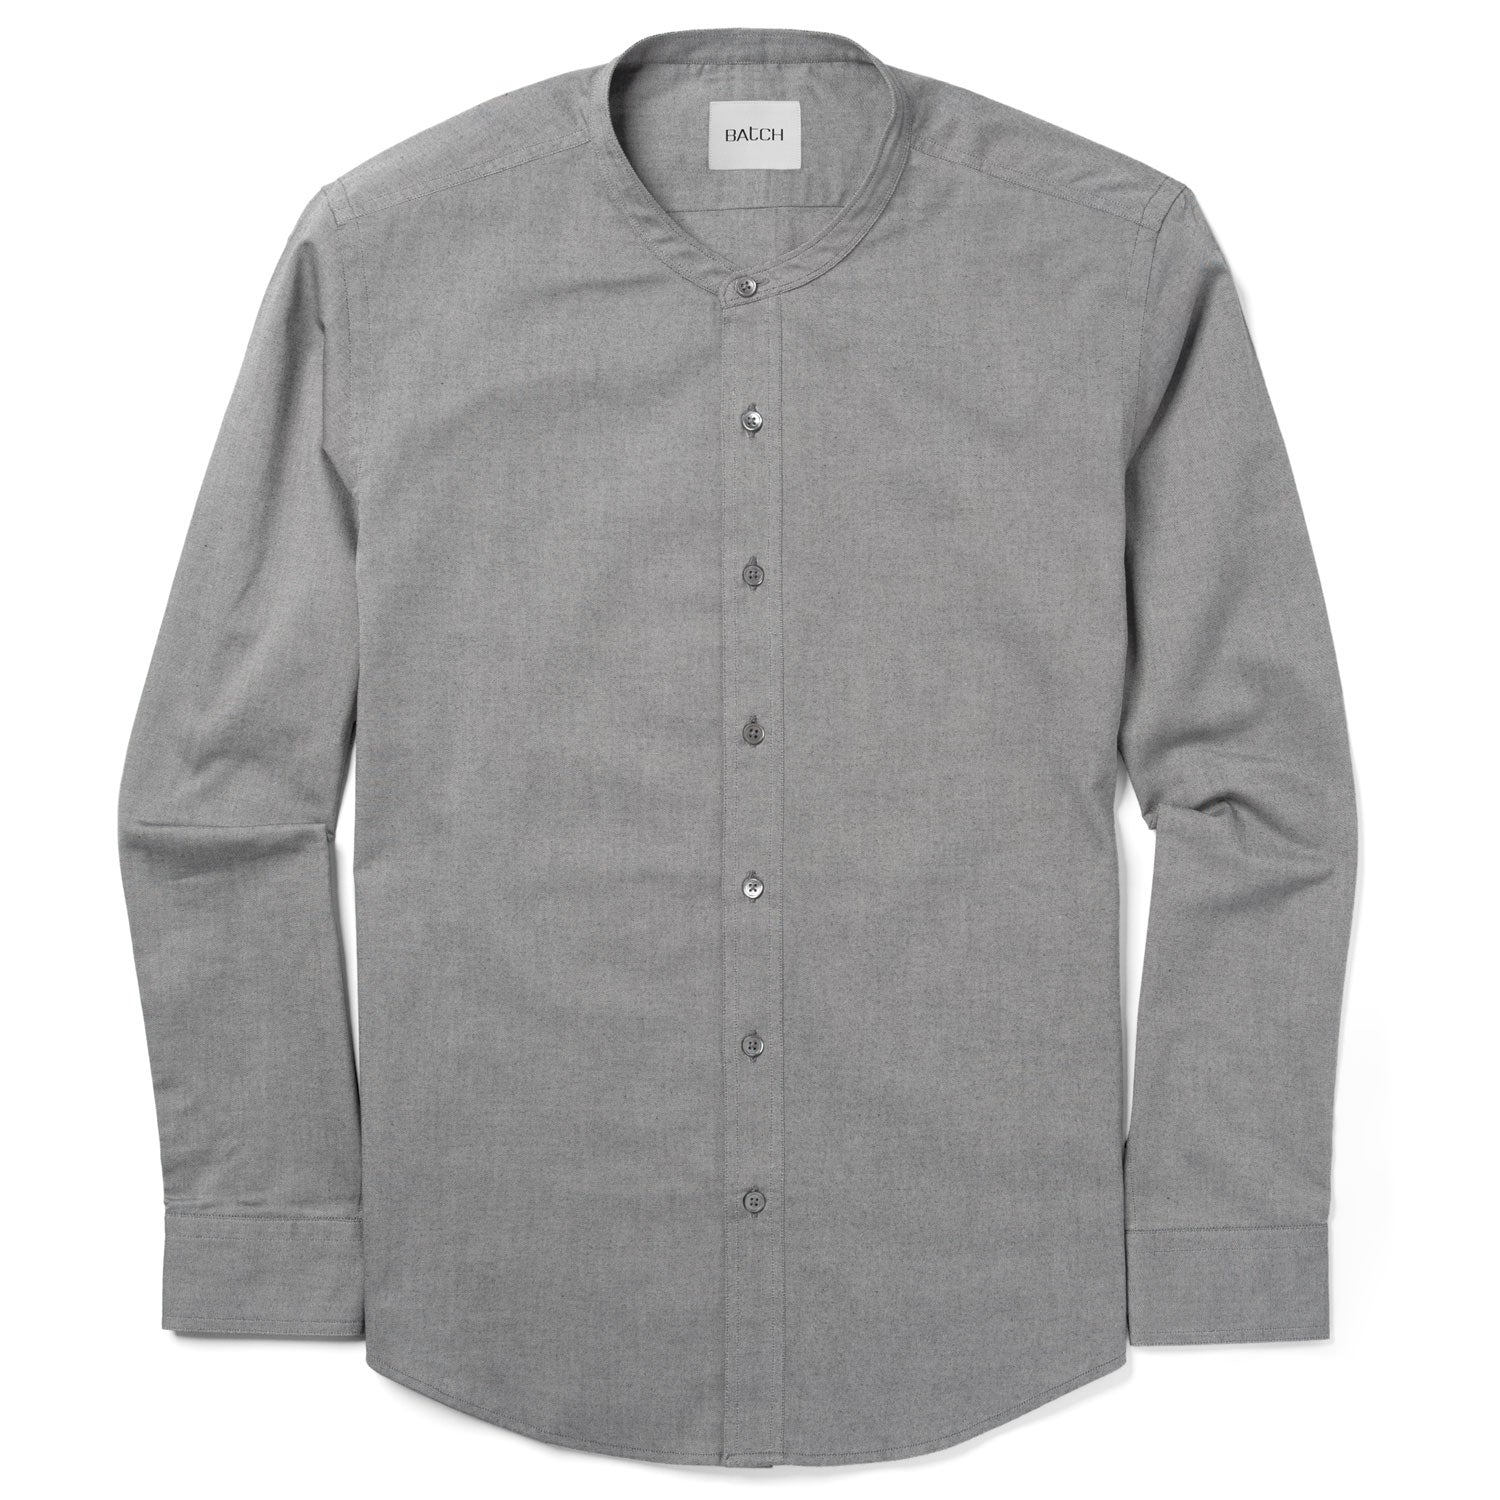 Essential Band Collar Button Down Shirt - Flint Gray Cotton Oxford